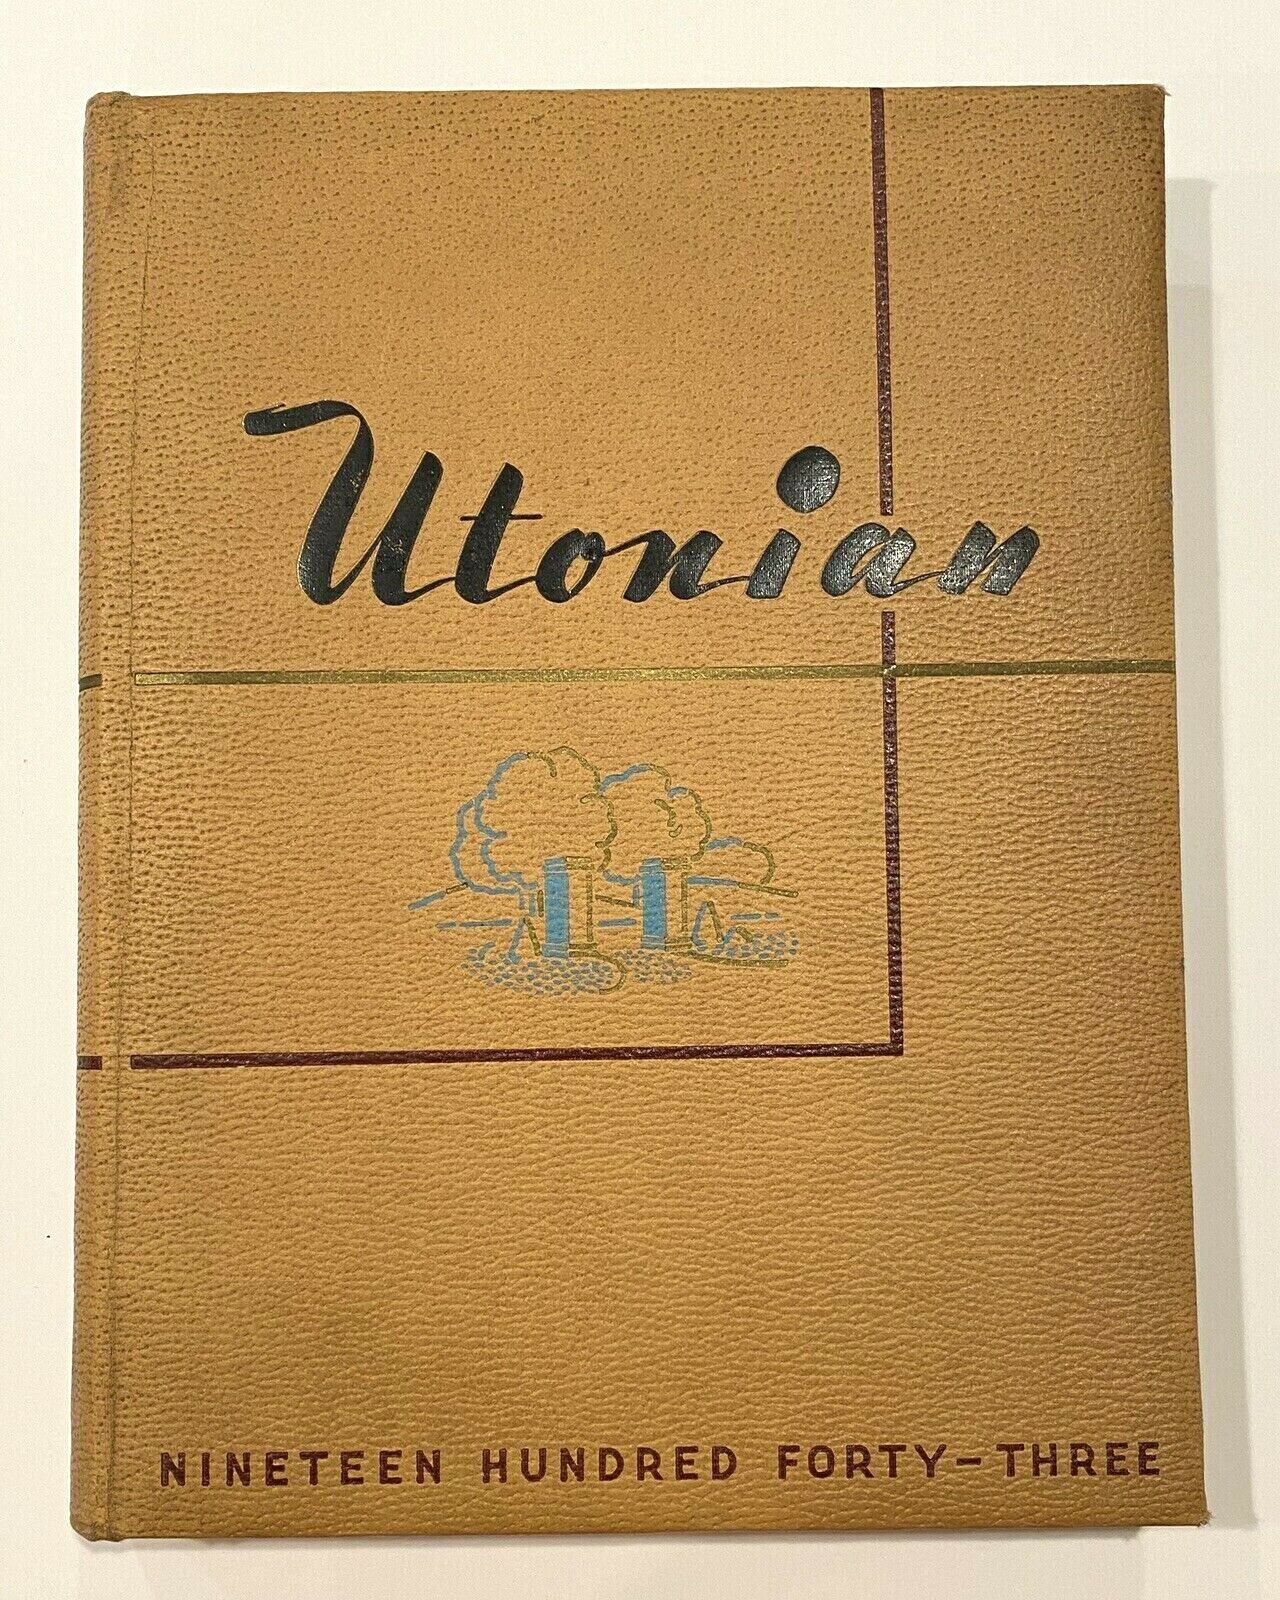 1943 University of Utah, Utonian, University Yearbook Annual, Salt Lake City